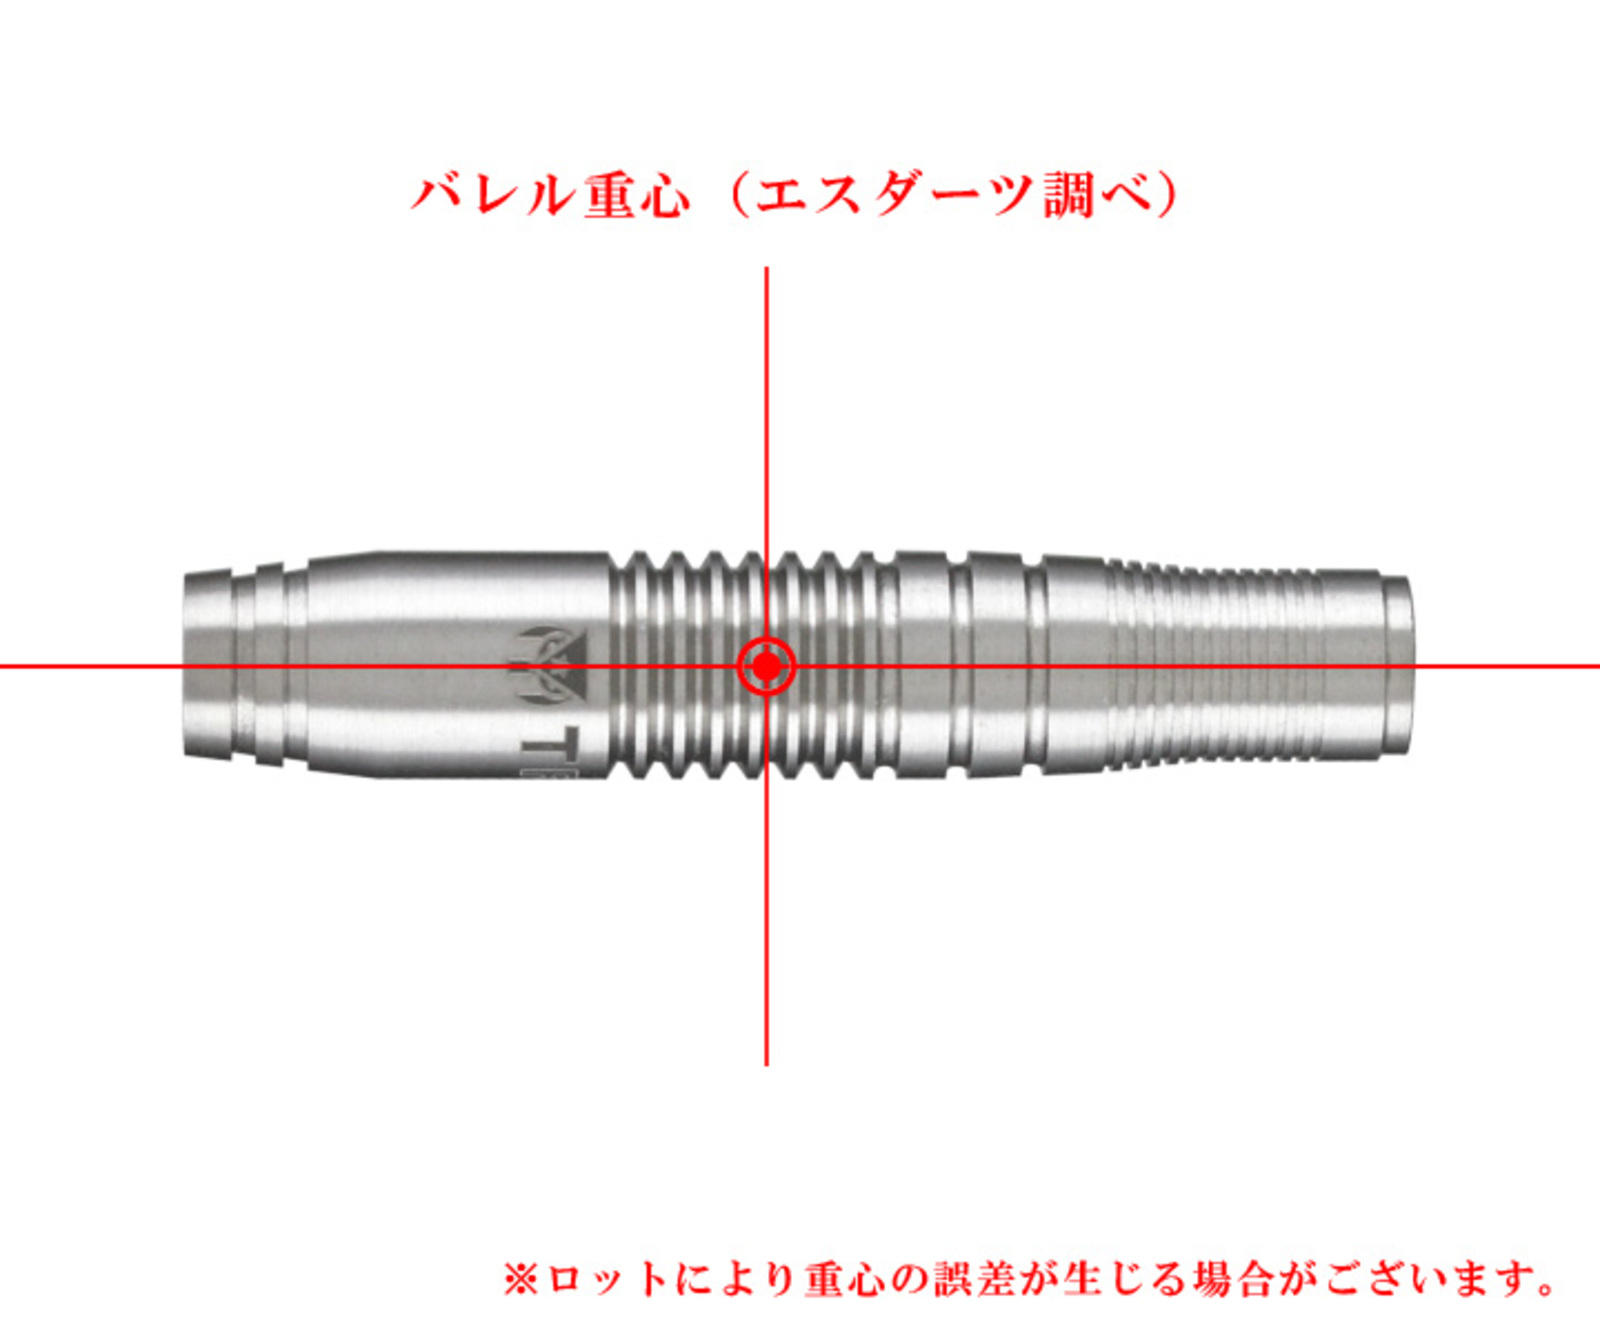 Darts & 6.9～7.4mm | Darts Online Shop S-DARTS from JAPAN.